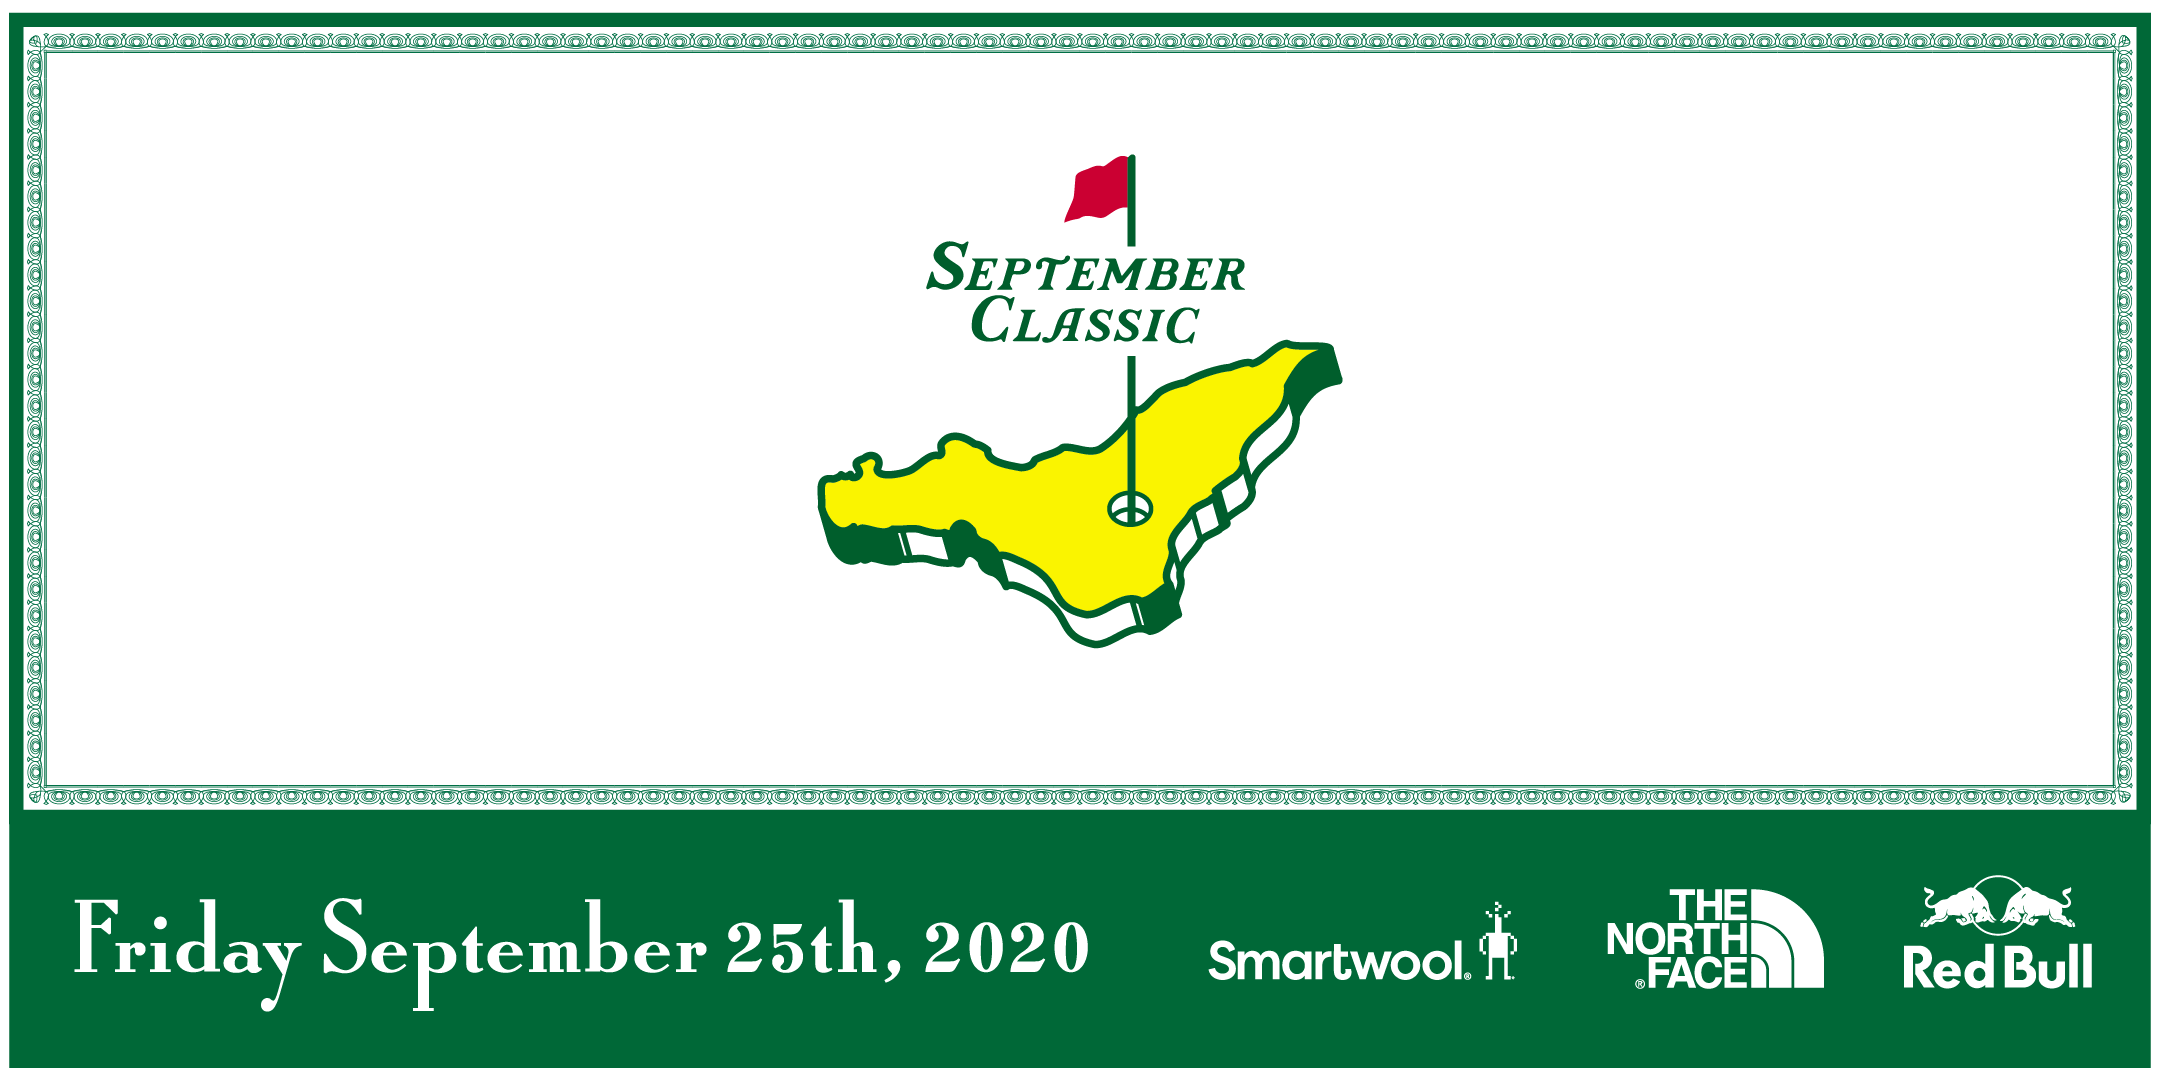 September Classic - Charity Golf Tournament